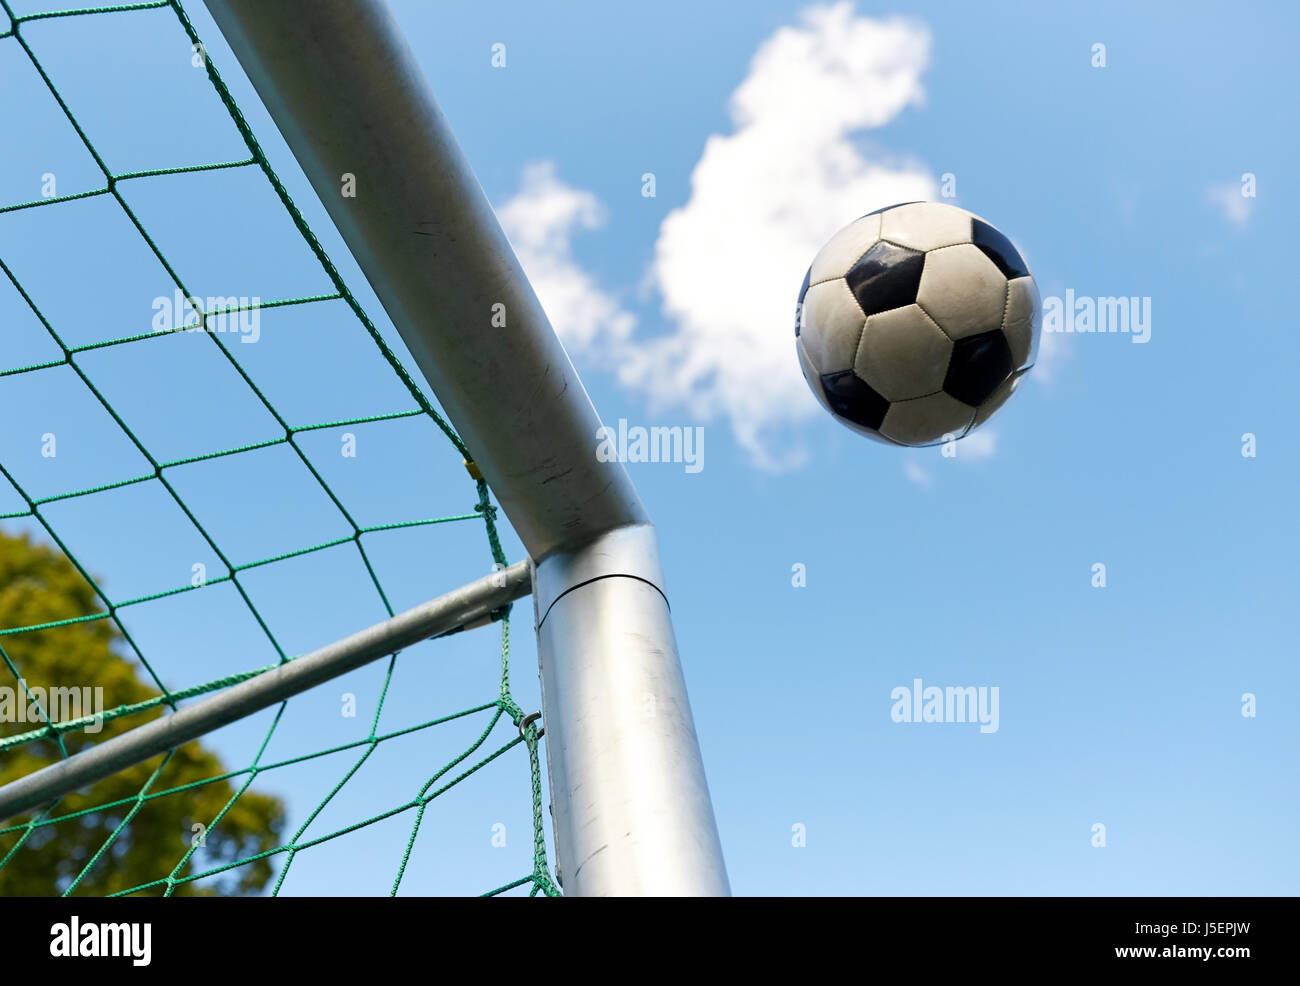 Soccer Ball Flying Into Football Goal Net Over Sky Stock Photo Alamy